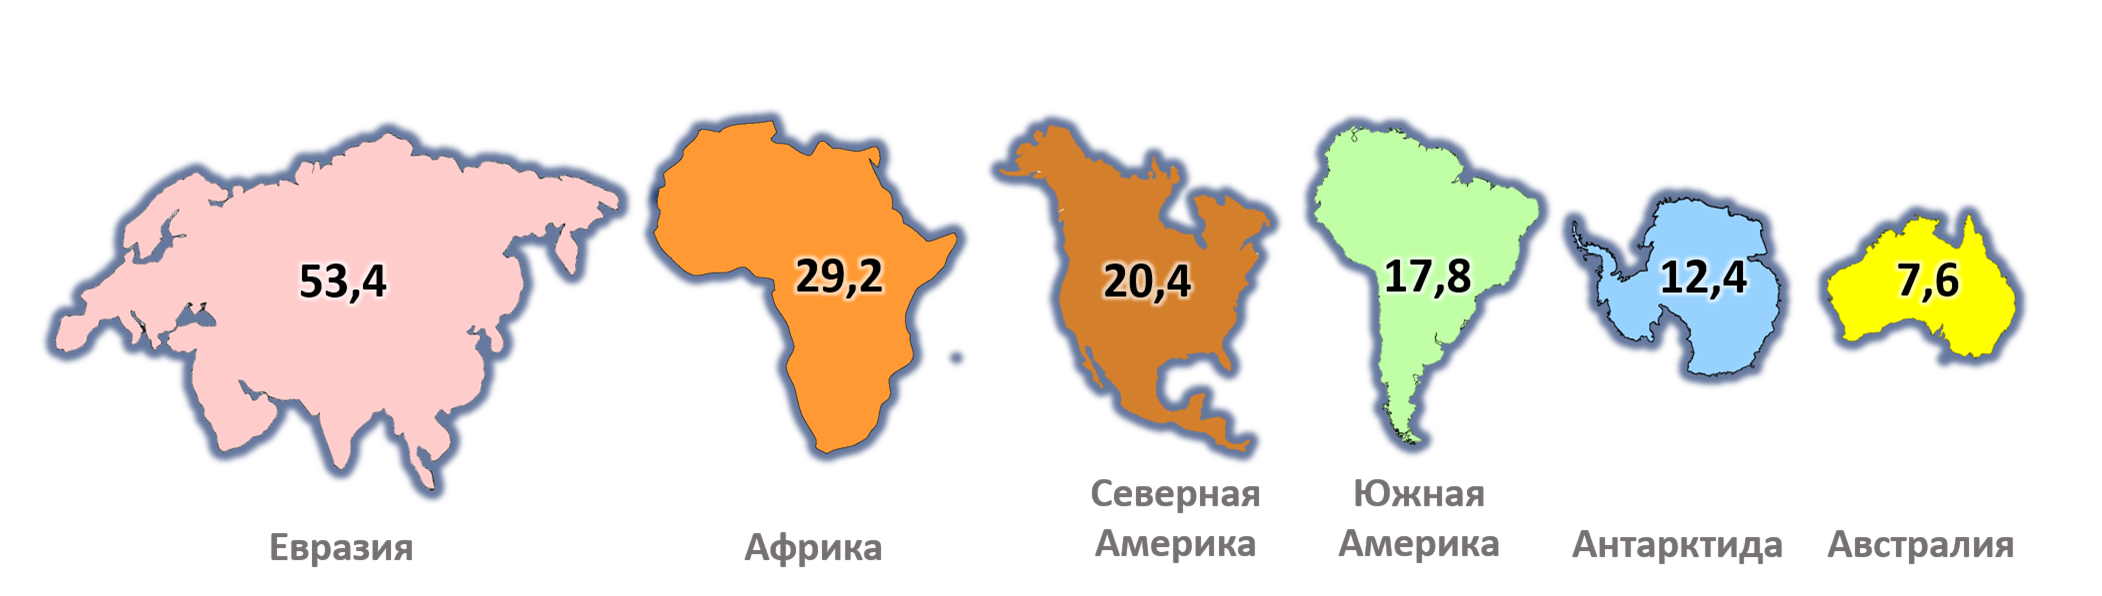 Какое место среди материков занимает северная америка. Евразия Африка Северная Америка Южная Америка Австралия Антарктида. Сравнение размеров материков на карте. Размеры материков по площади.